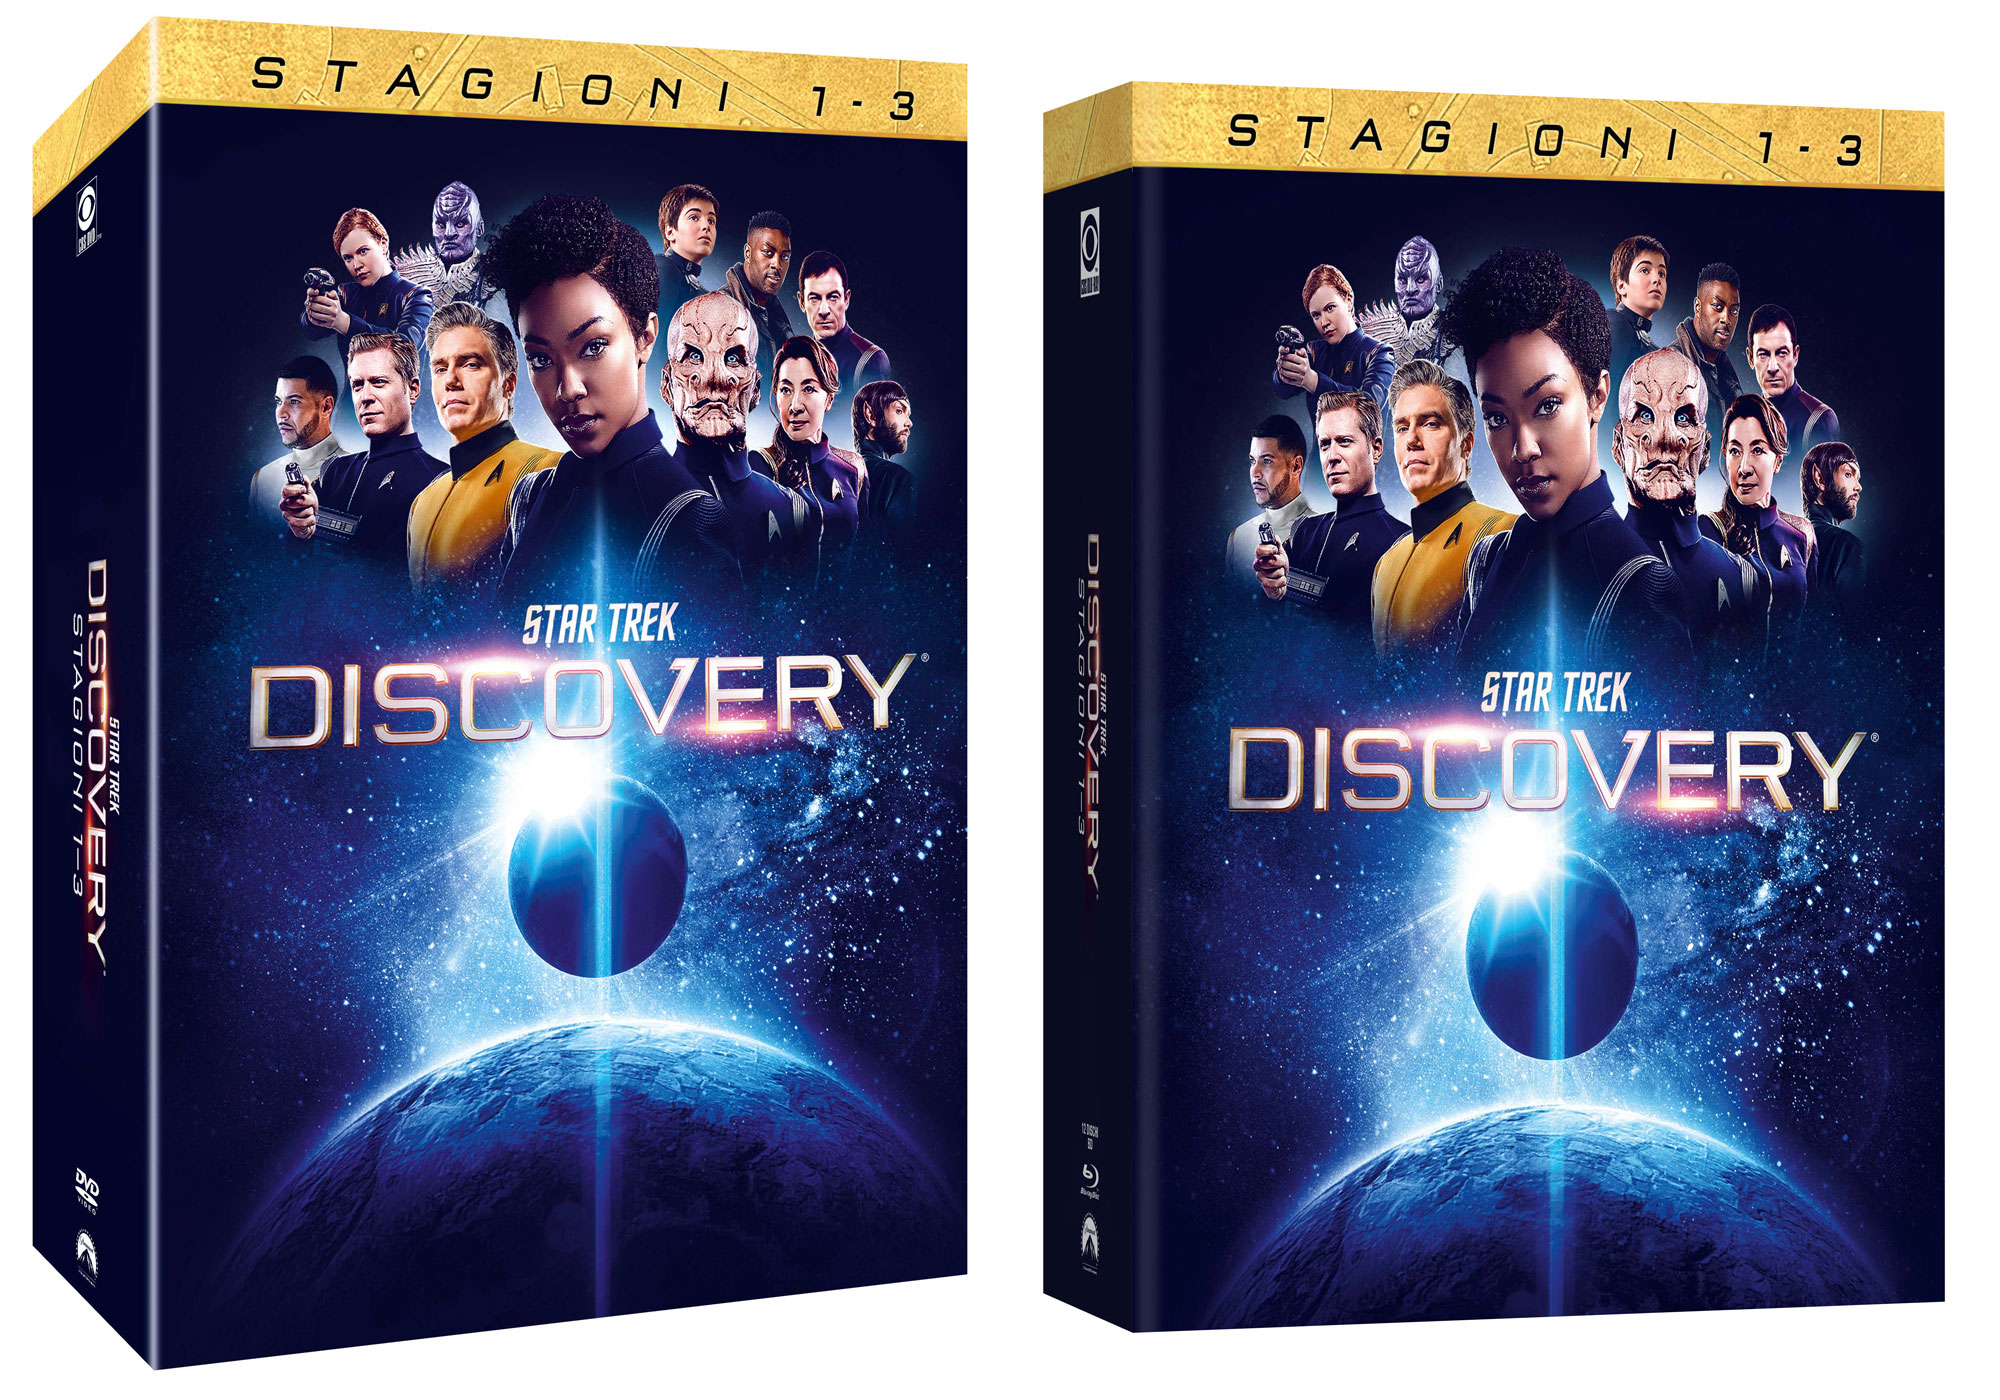 Star Trek Discovery - Stagioni 1-3 in DVD e Blu-ray